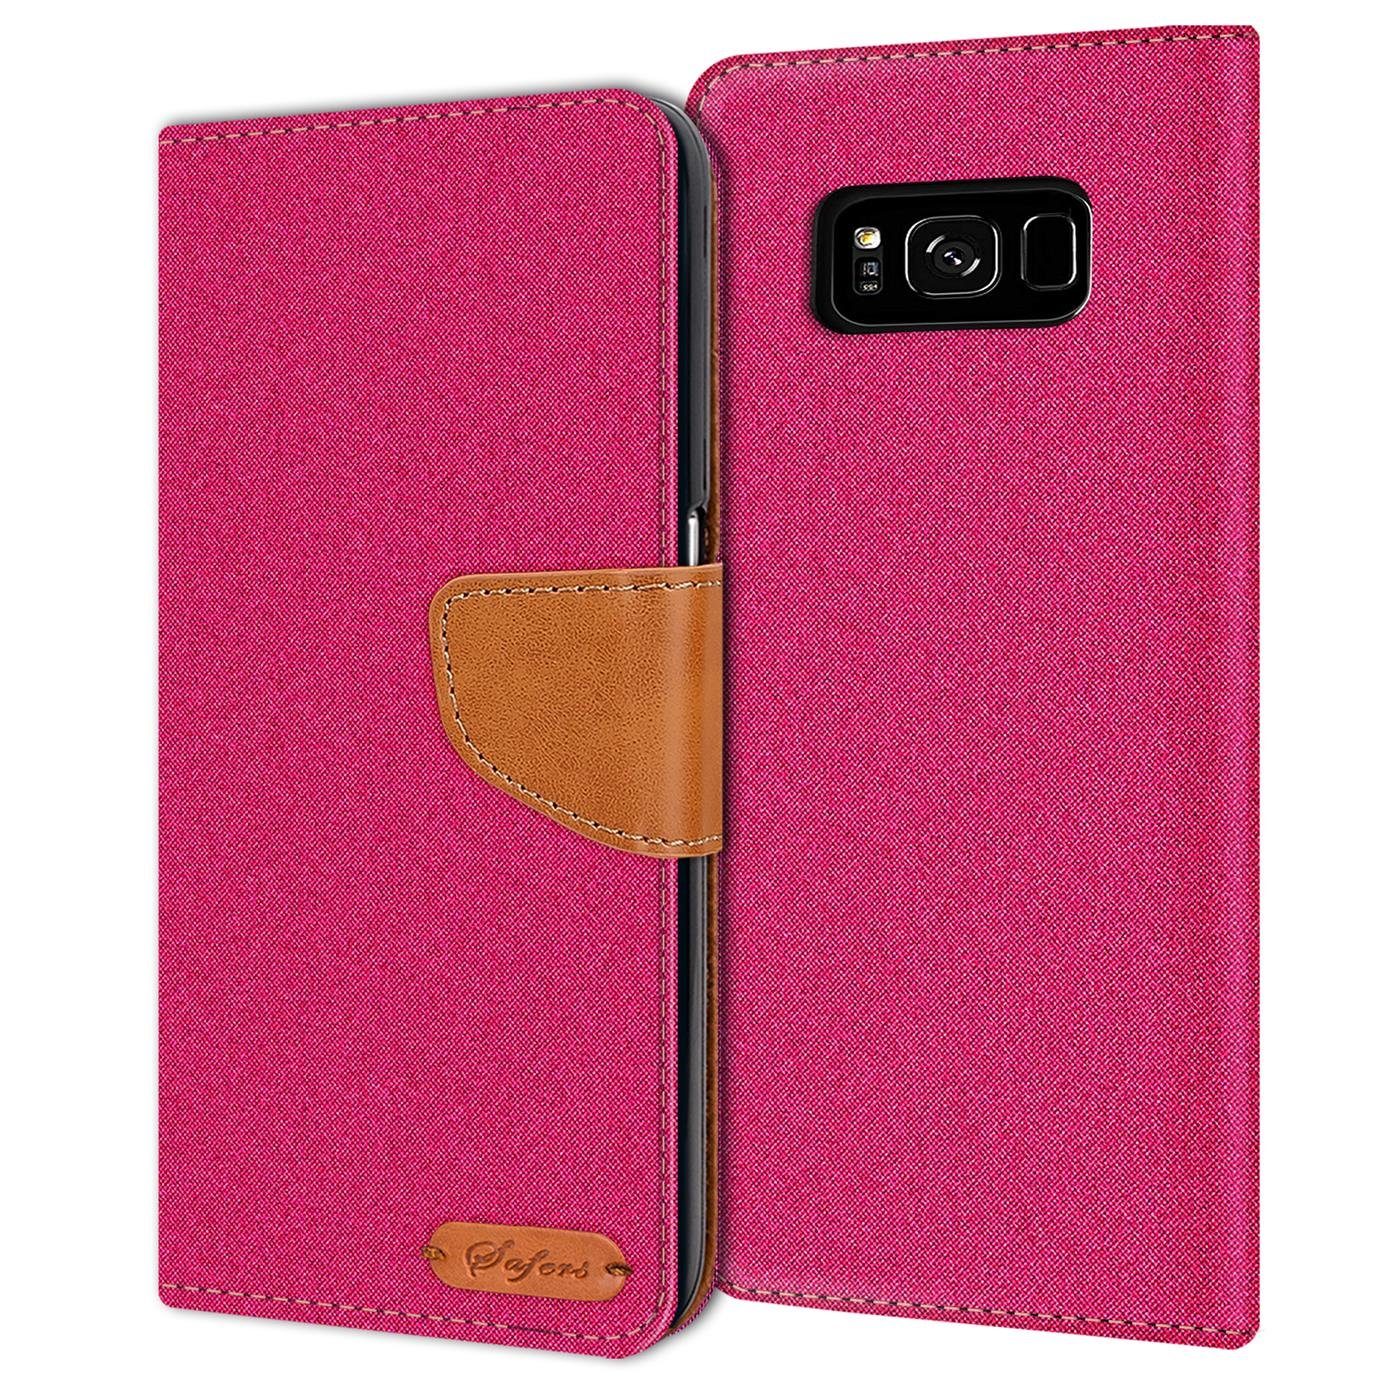 CoolGadget Handyhülle Denim Schutzhülle Flip Case für Samsung Galaxy S8 5,8 Zoll, Book Cover Handy Tasche Hülle für Samsung S8 Klapphülle